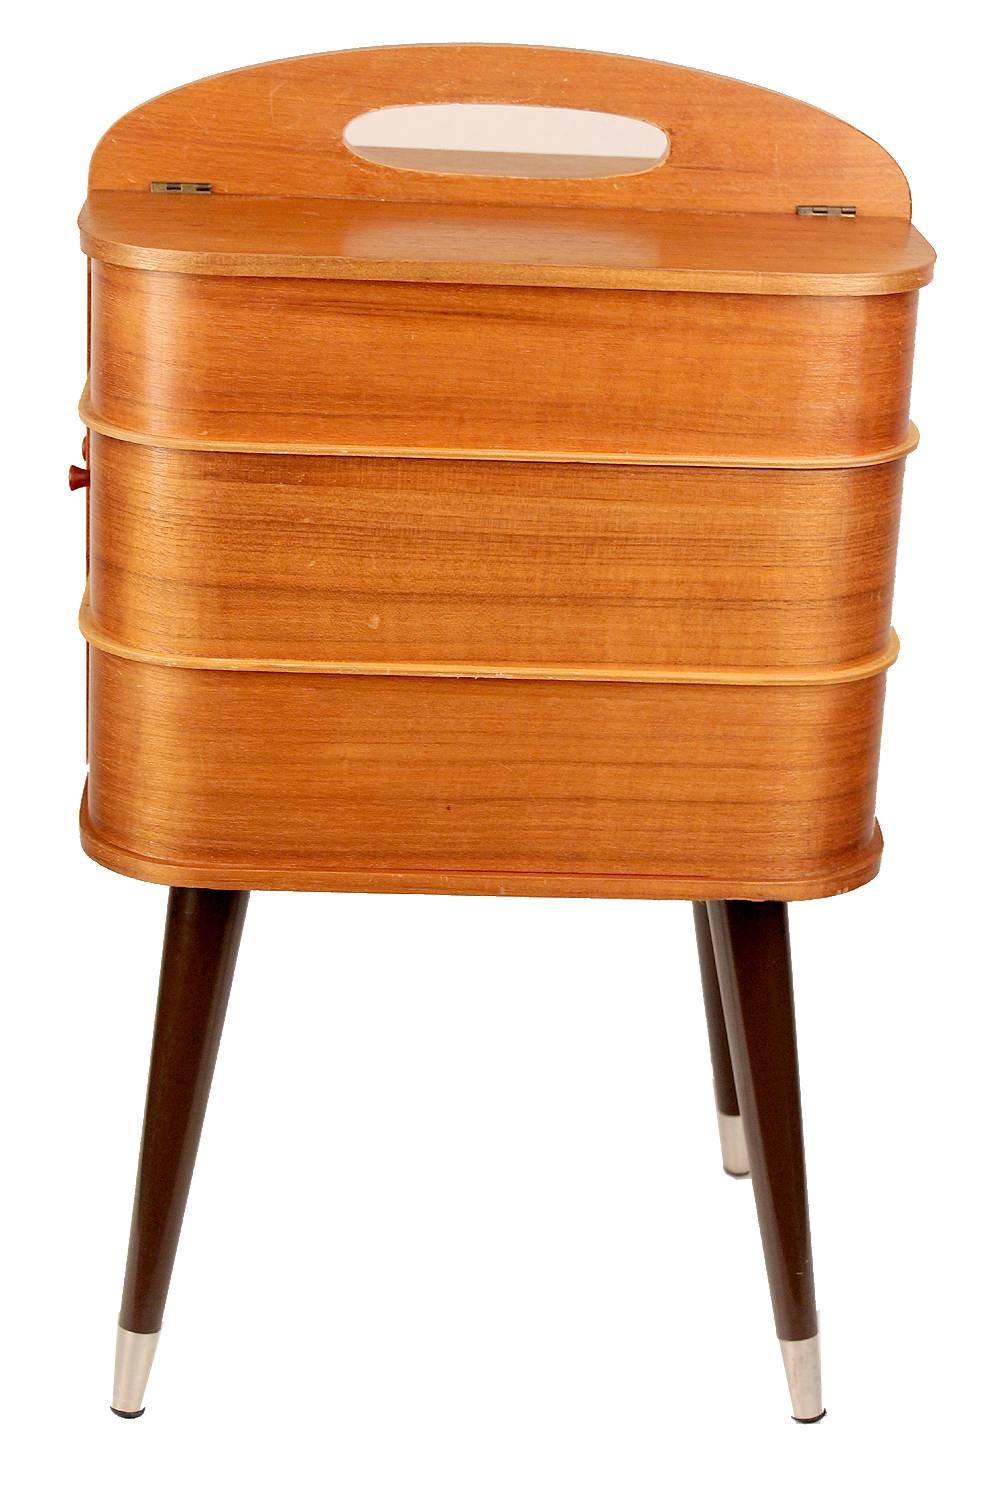 Mid-20th Century Danish Modern Sewing Box Storage Chest Plywood, 1960s Modernist Design Vintage